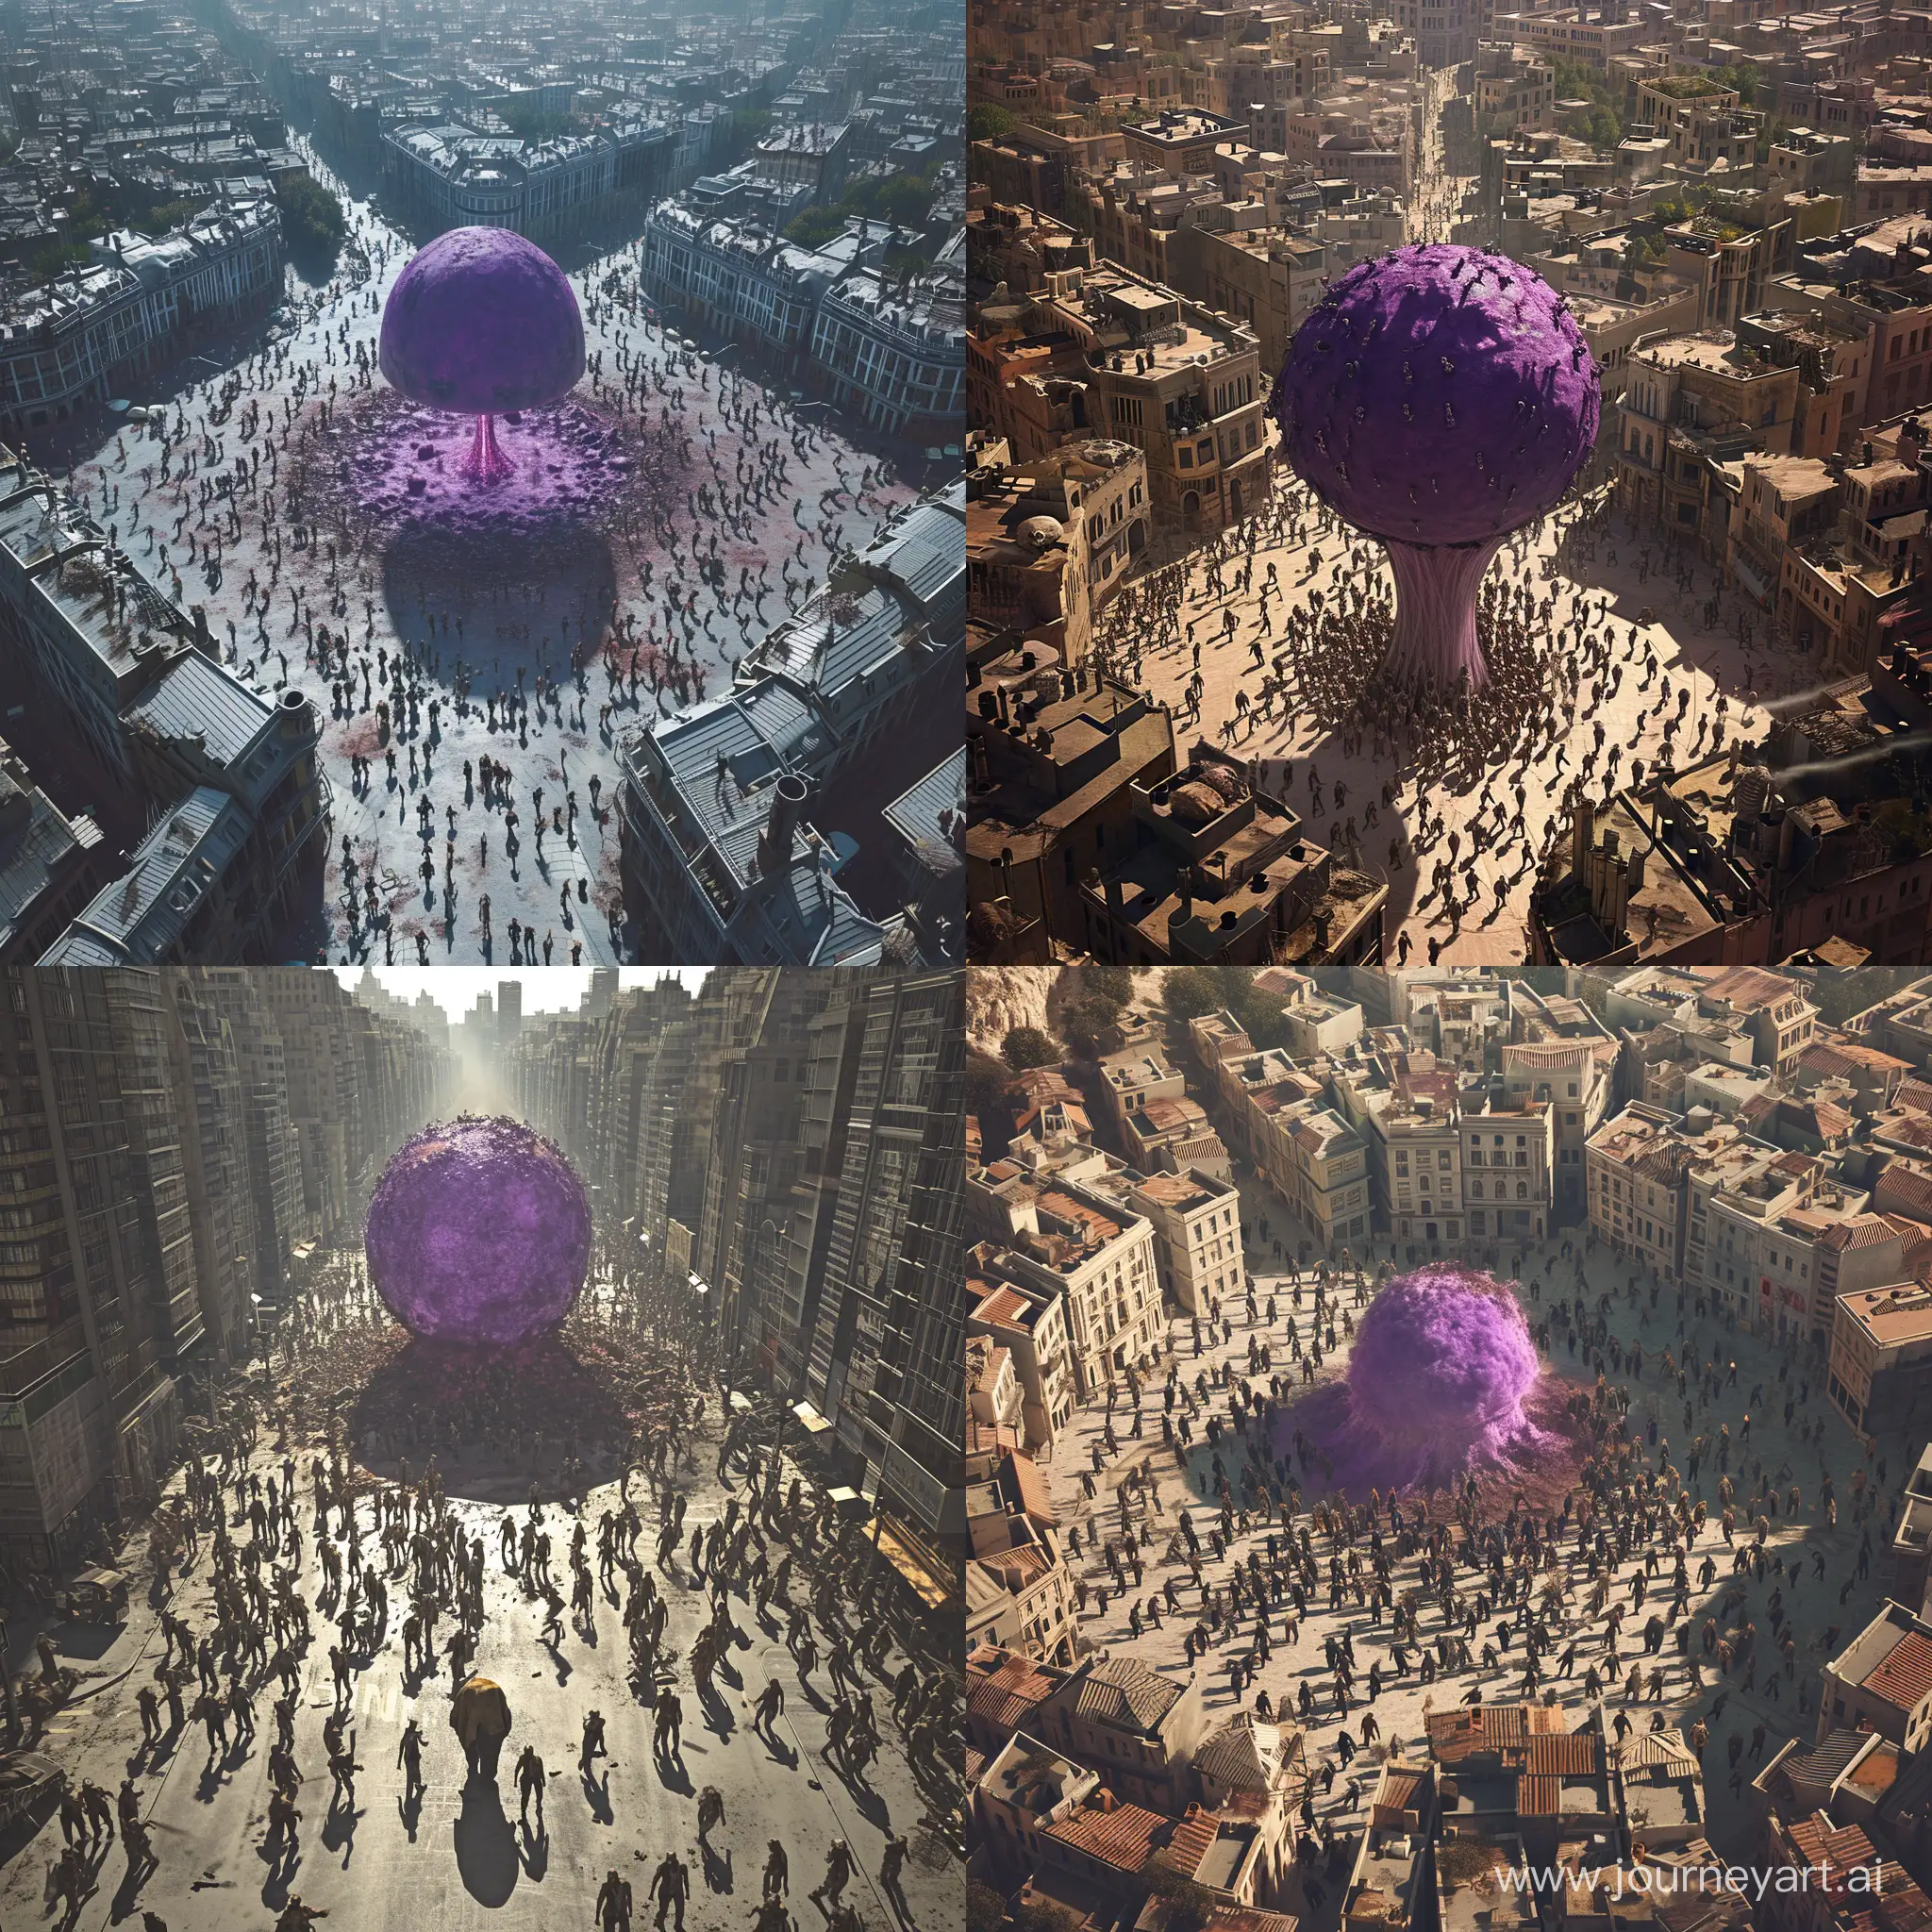 Zombie-Apocalypse-in-Urban-Landscape-with-Purple-Nuclear-Mushroom